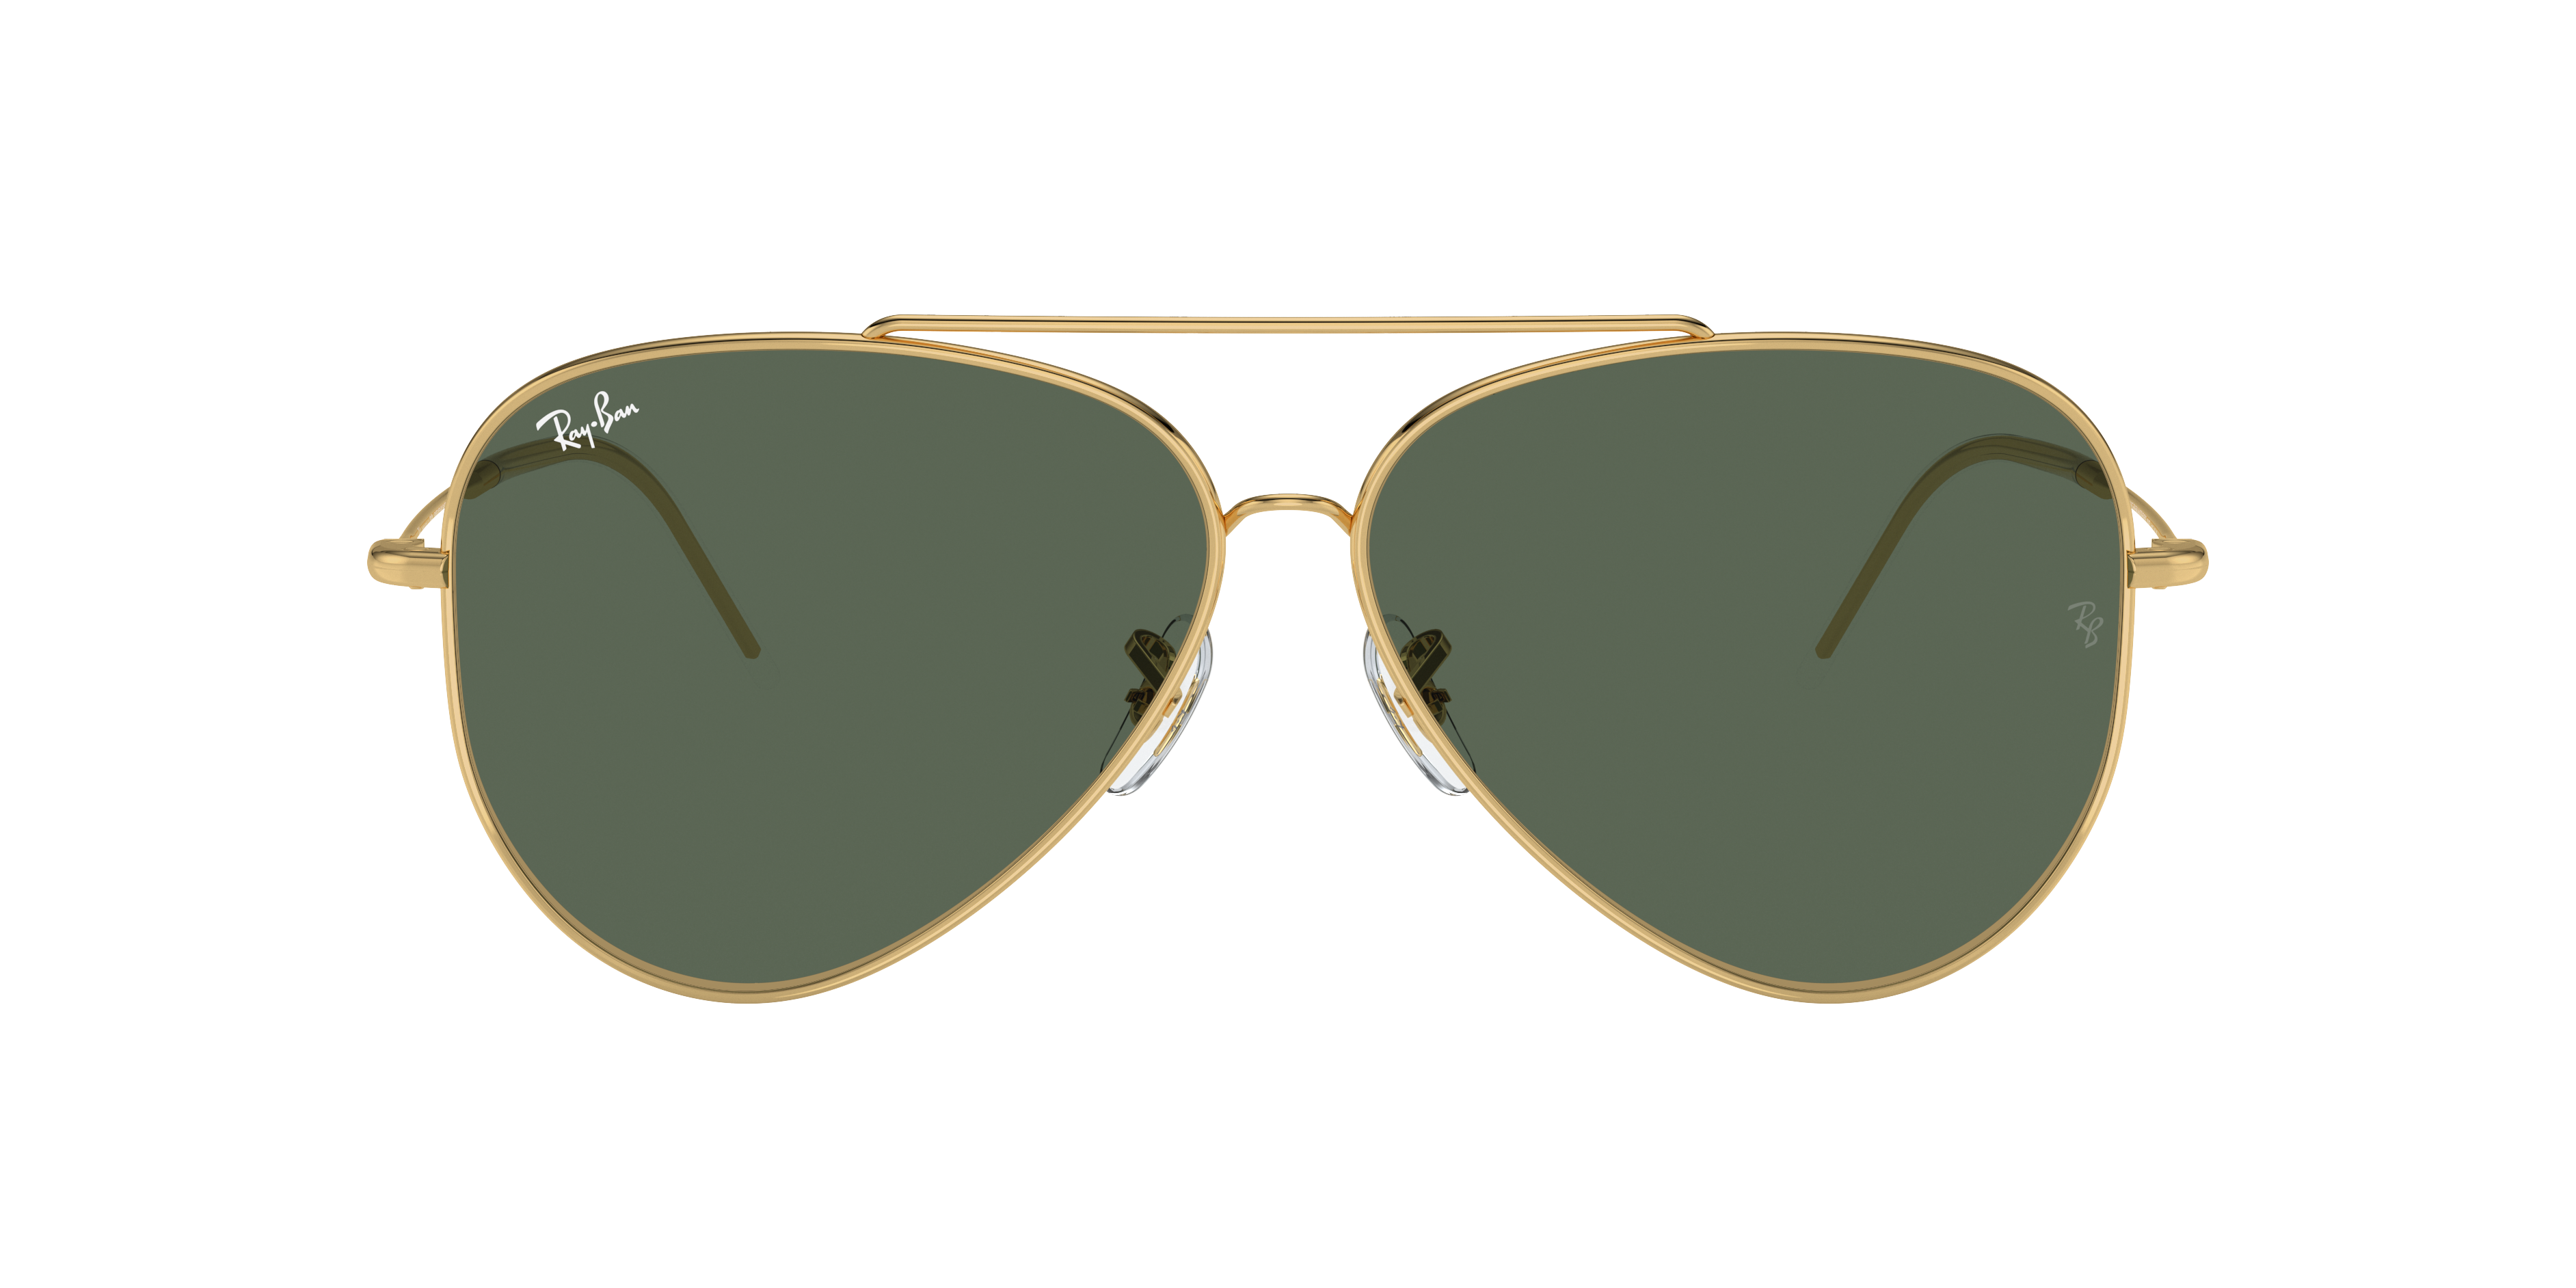 Ray-Ban RB3548 Medium (Size-54) Gold Green Unisex 001 Sunglasses